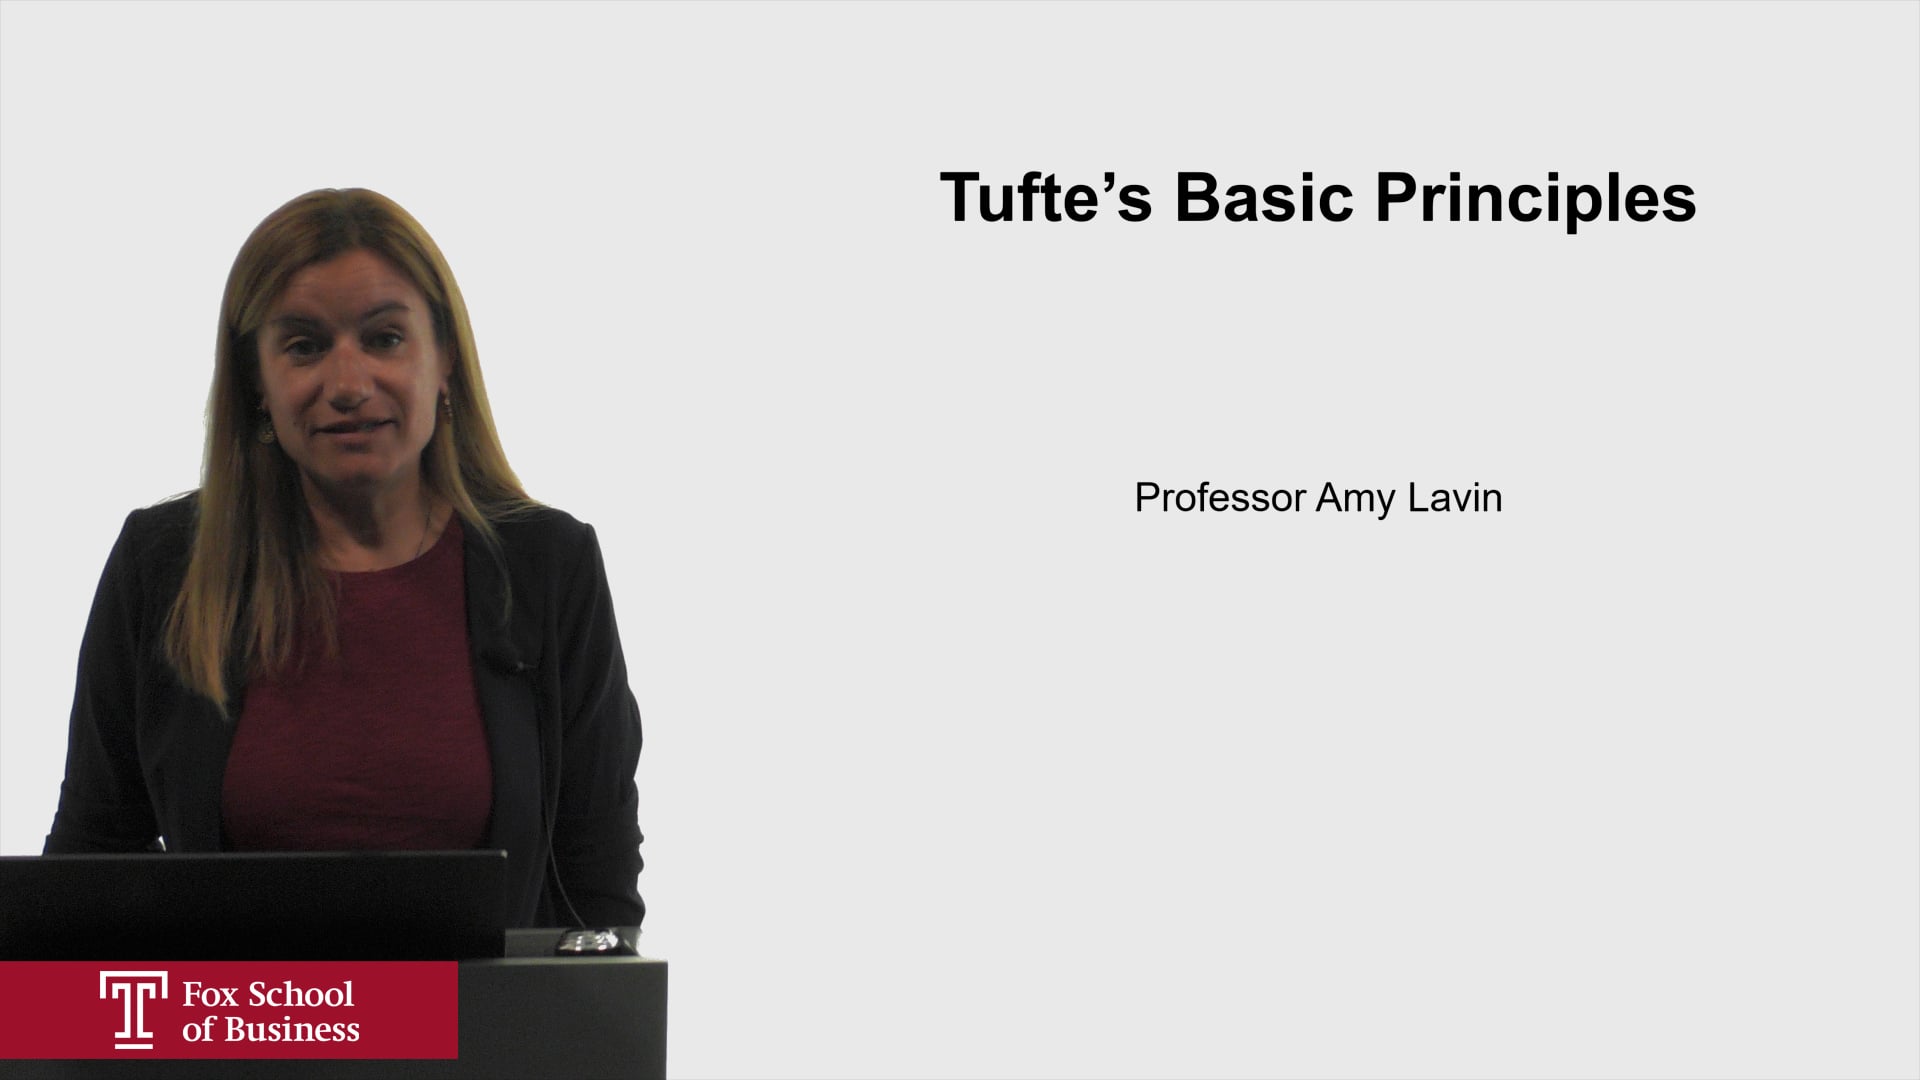 Tufte’s Basic Principles